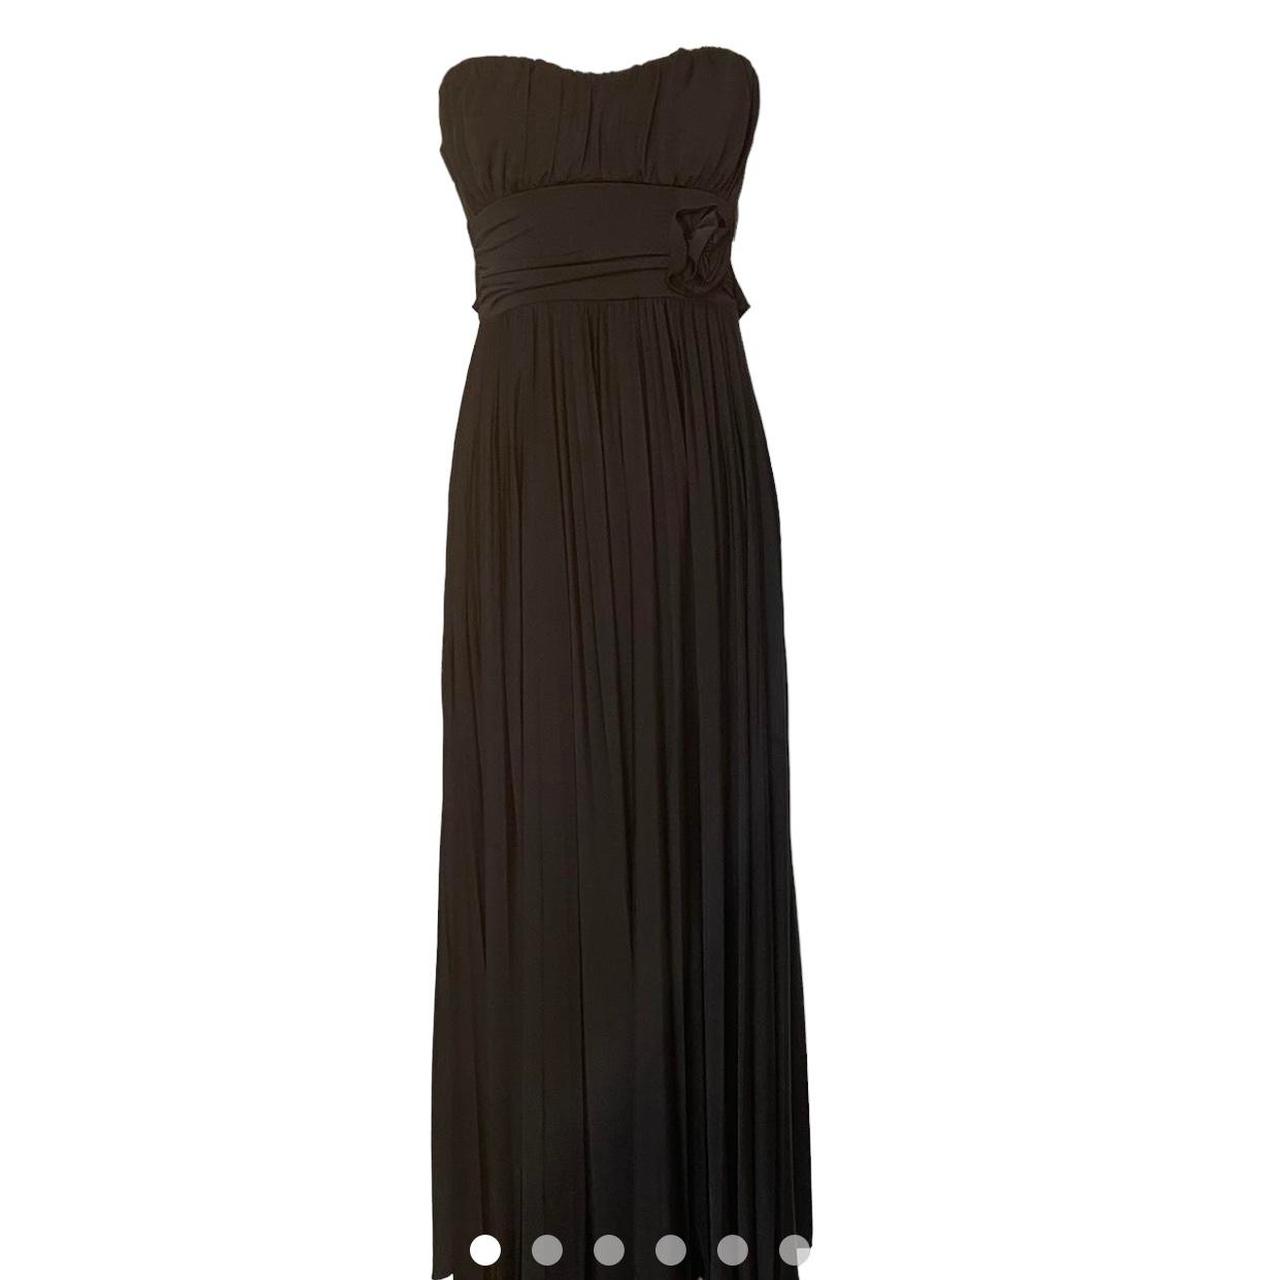 Black strapless long formal special occasion dress... - Depop